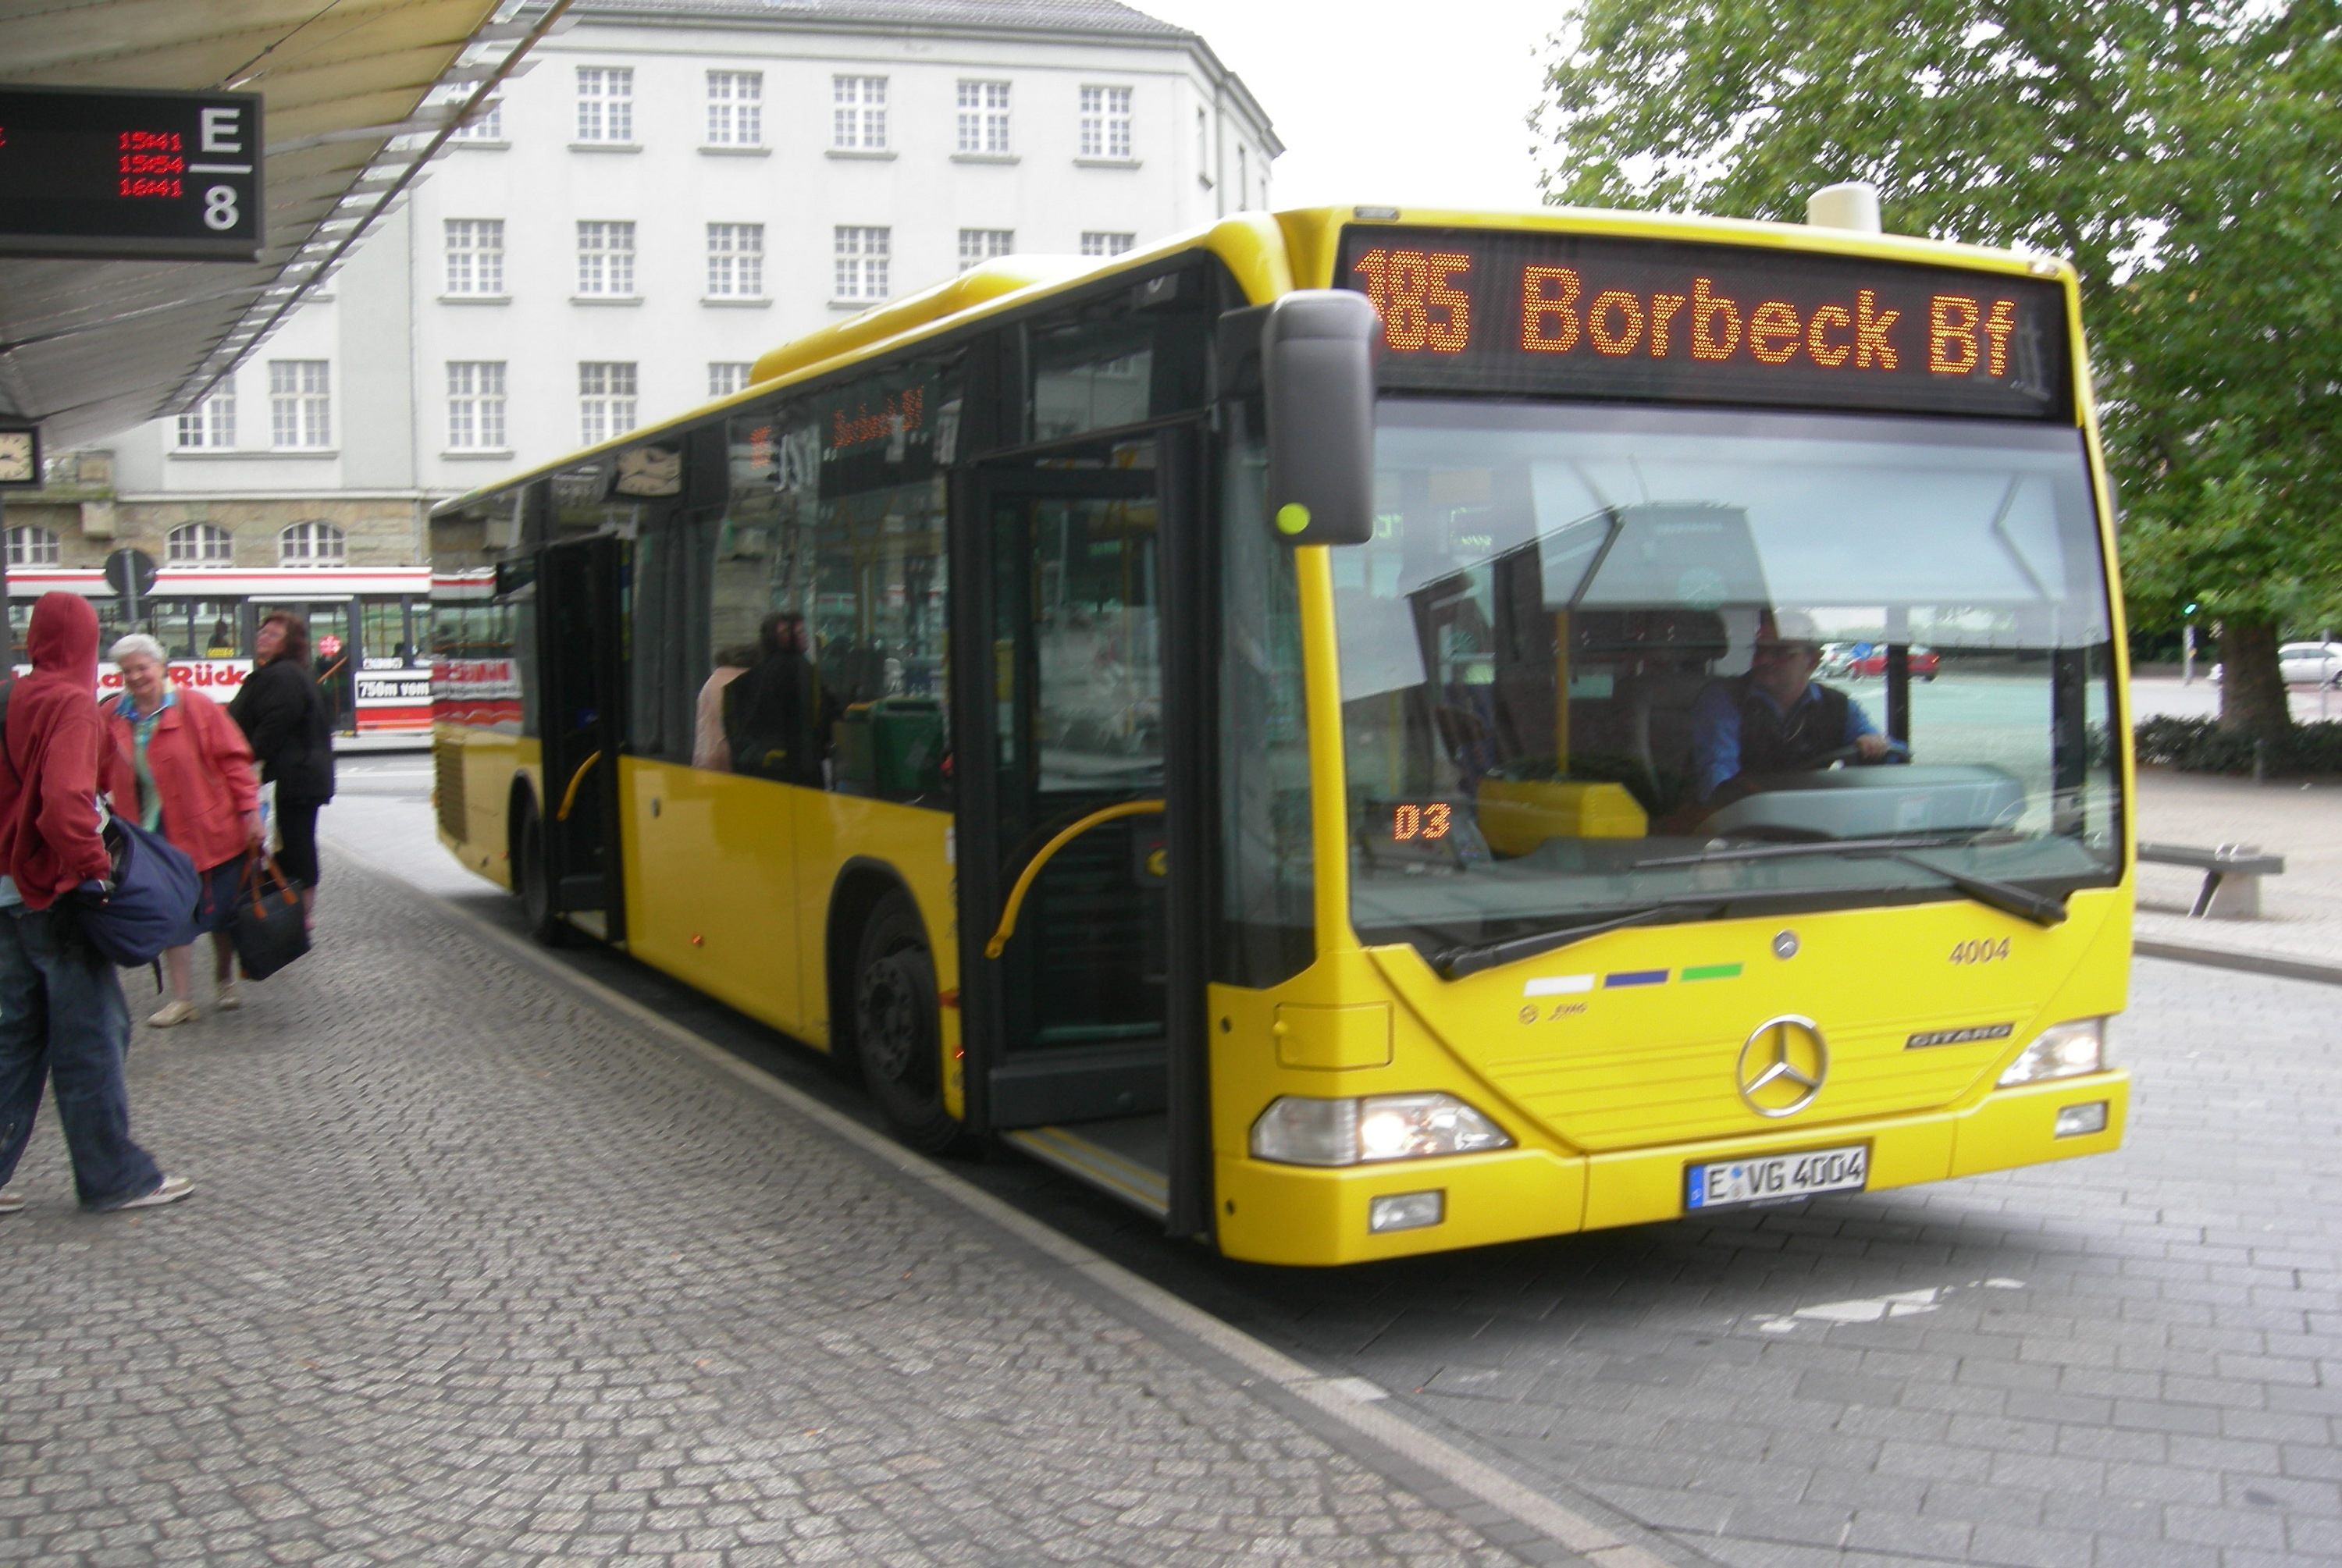 185 E-Borbeck Bf Oberhausen Hbf